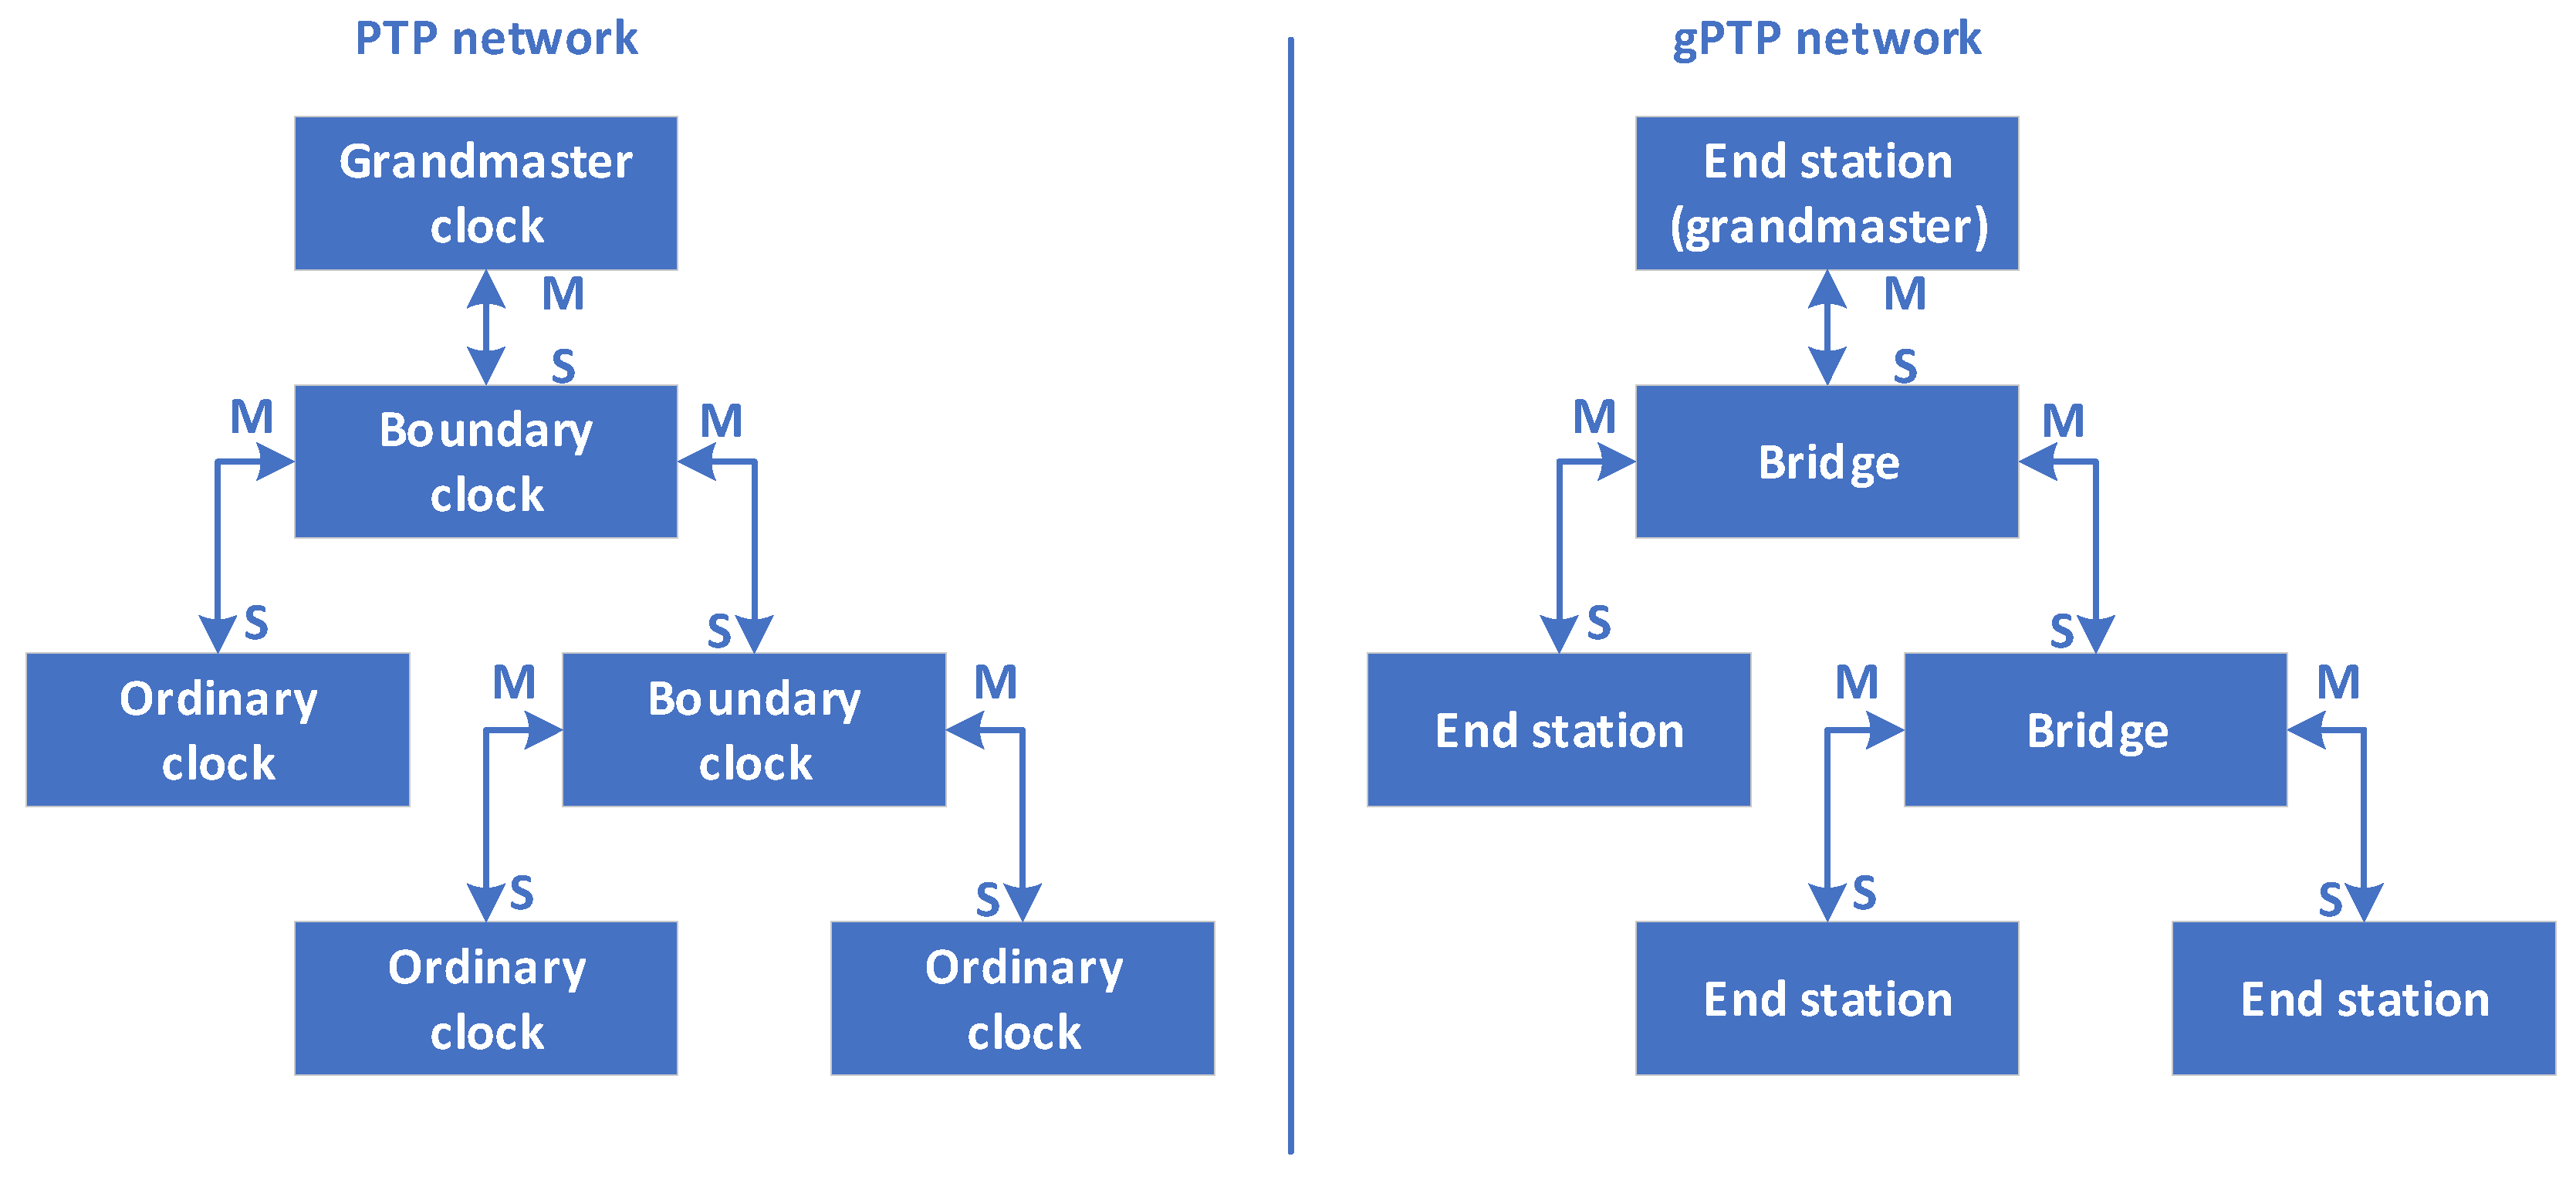 PTP Grandmaster Clock Market Size, Share, Opportunities & Forecast